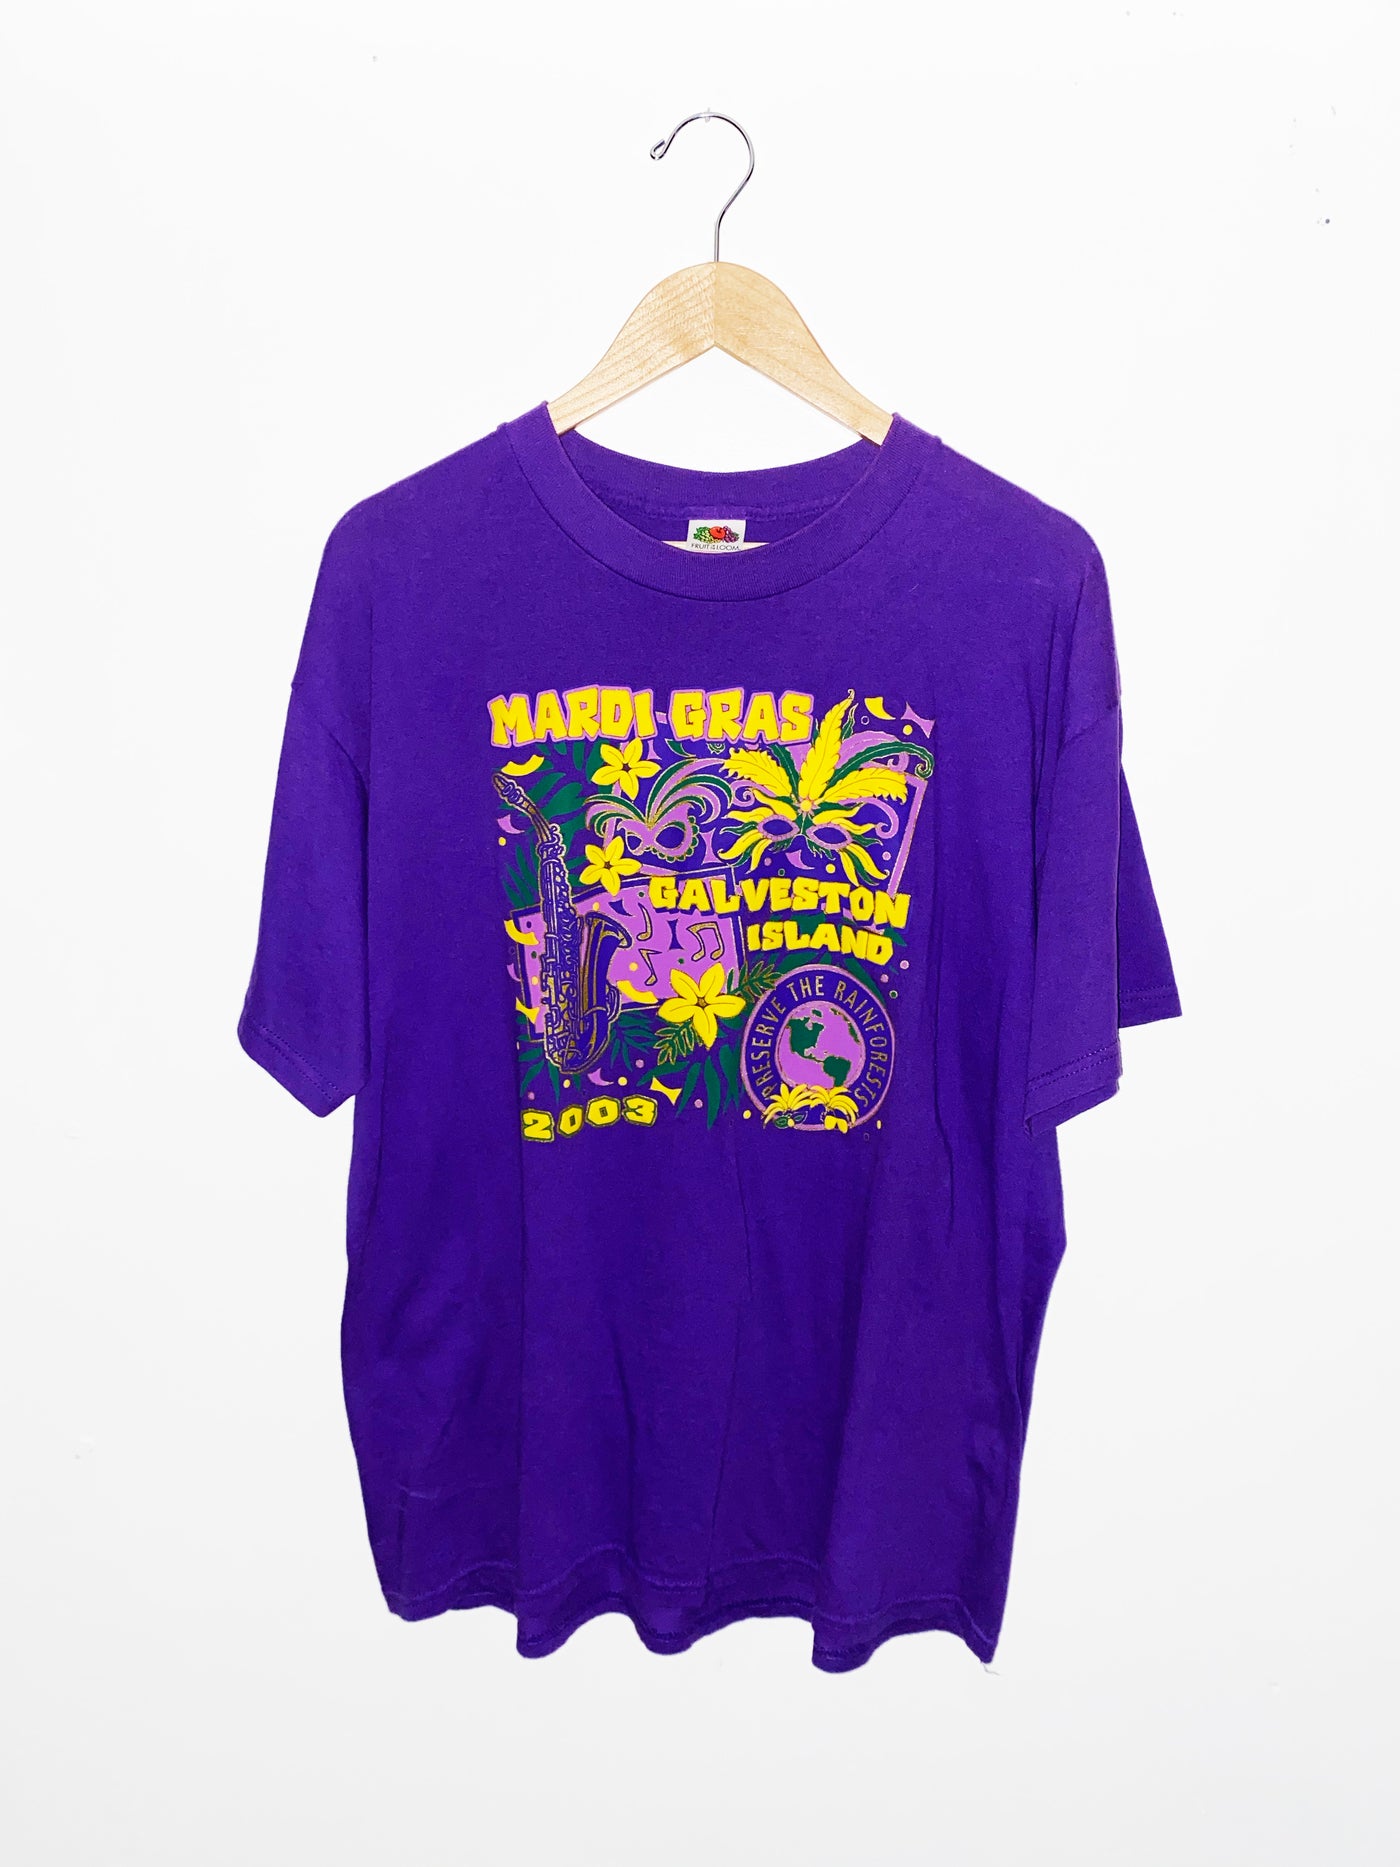 2003 Galveston Island Mardi Gras T-Shirt